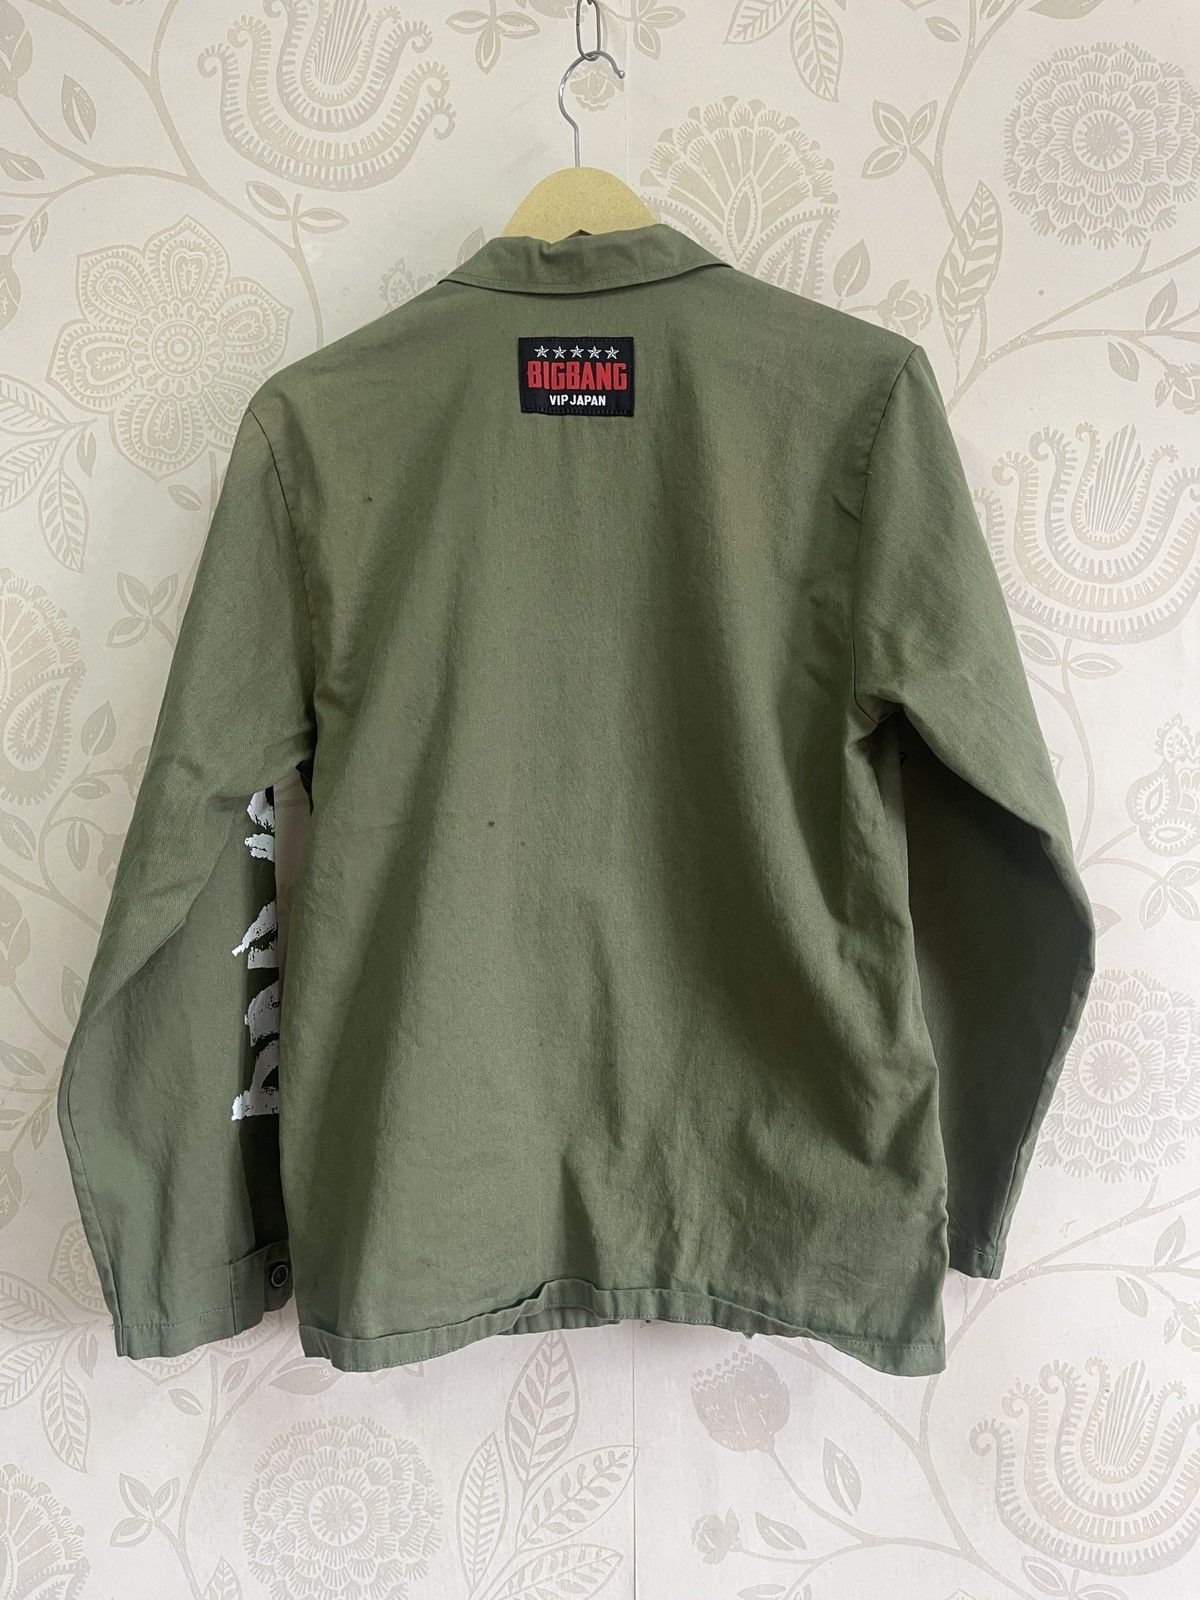 Designer Collection - BigBang VIP Japan Collector Item Long Sleeves Shirts - 3